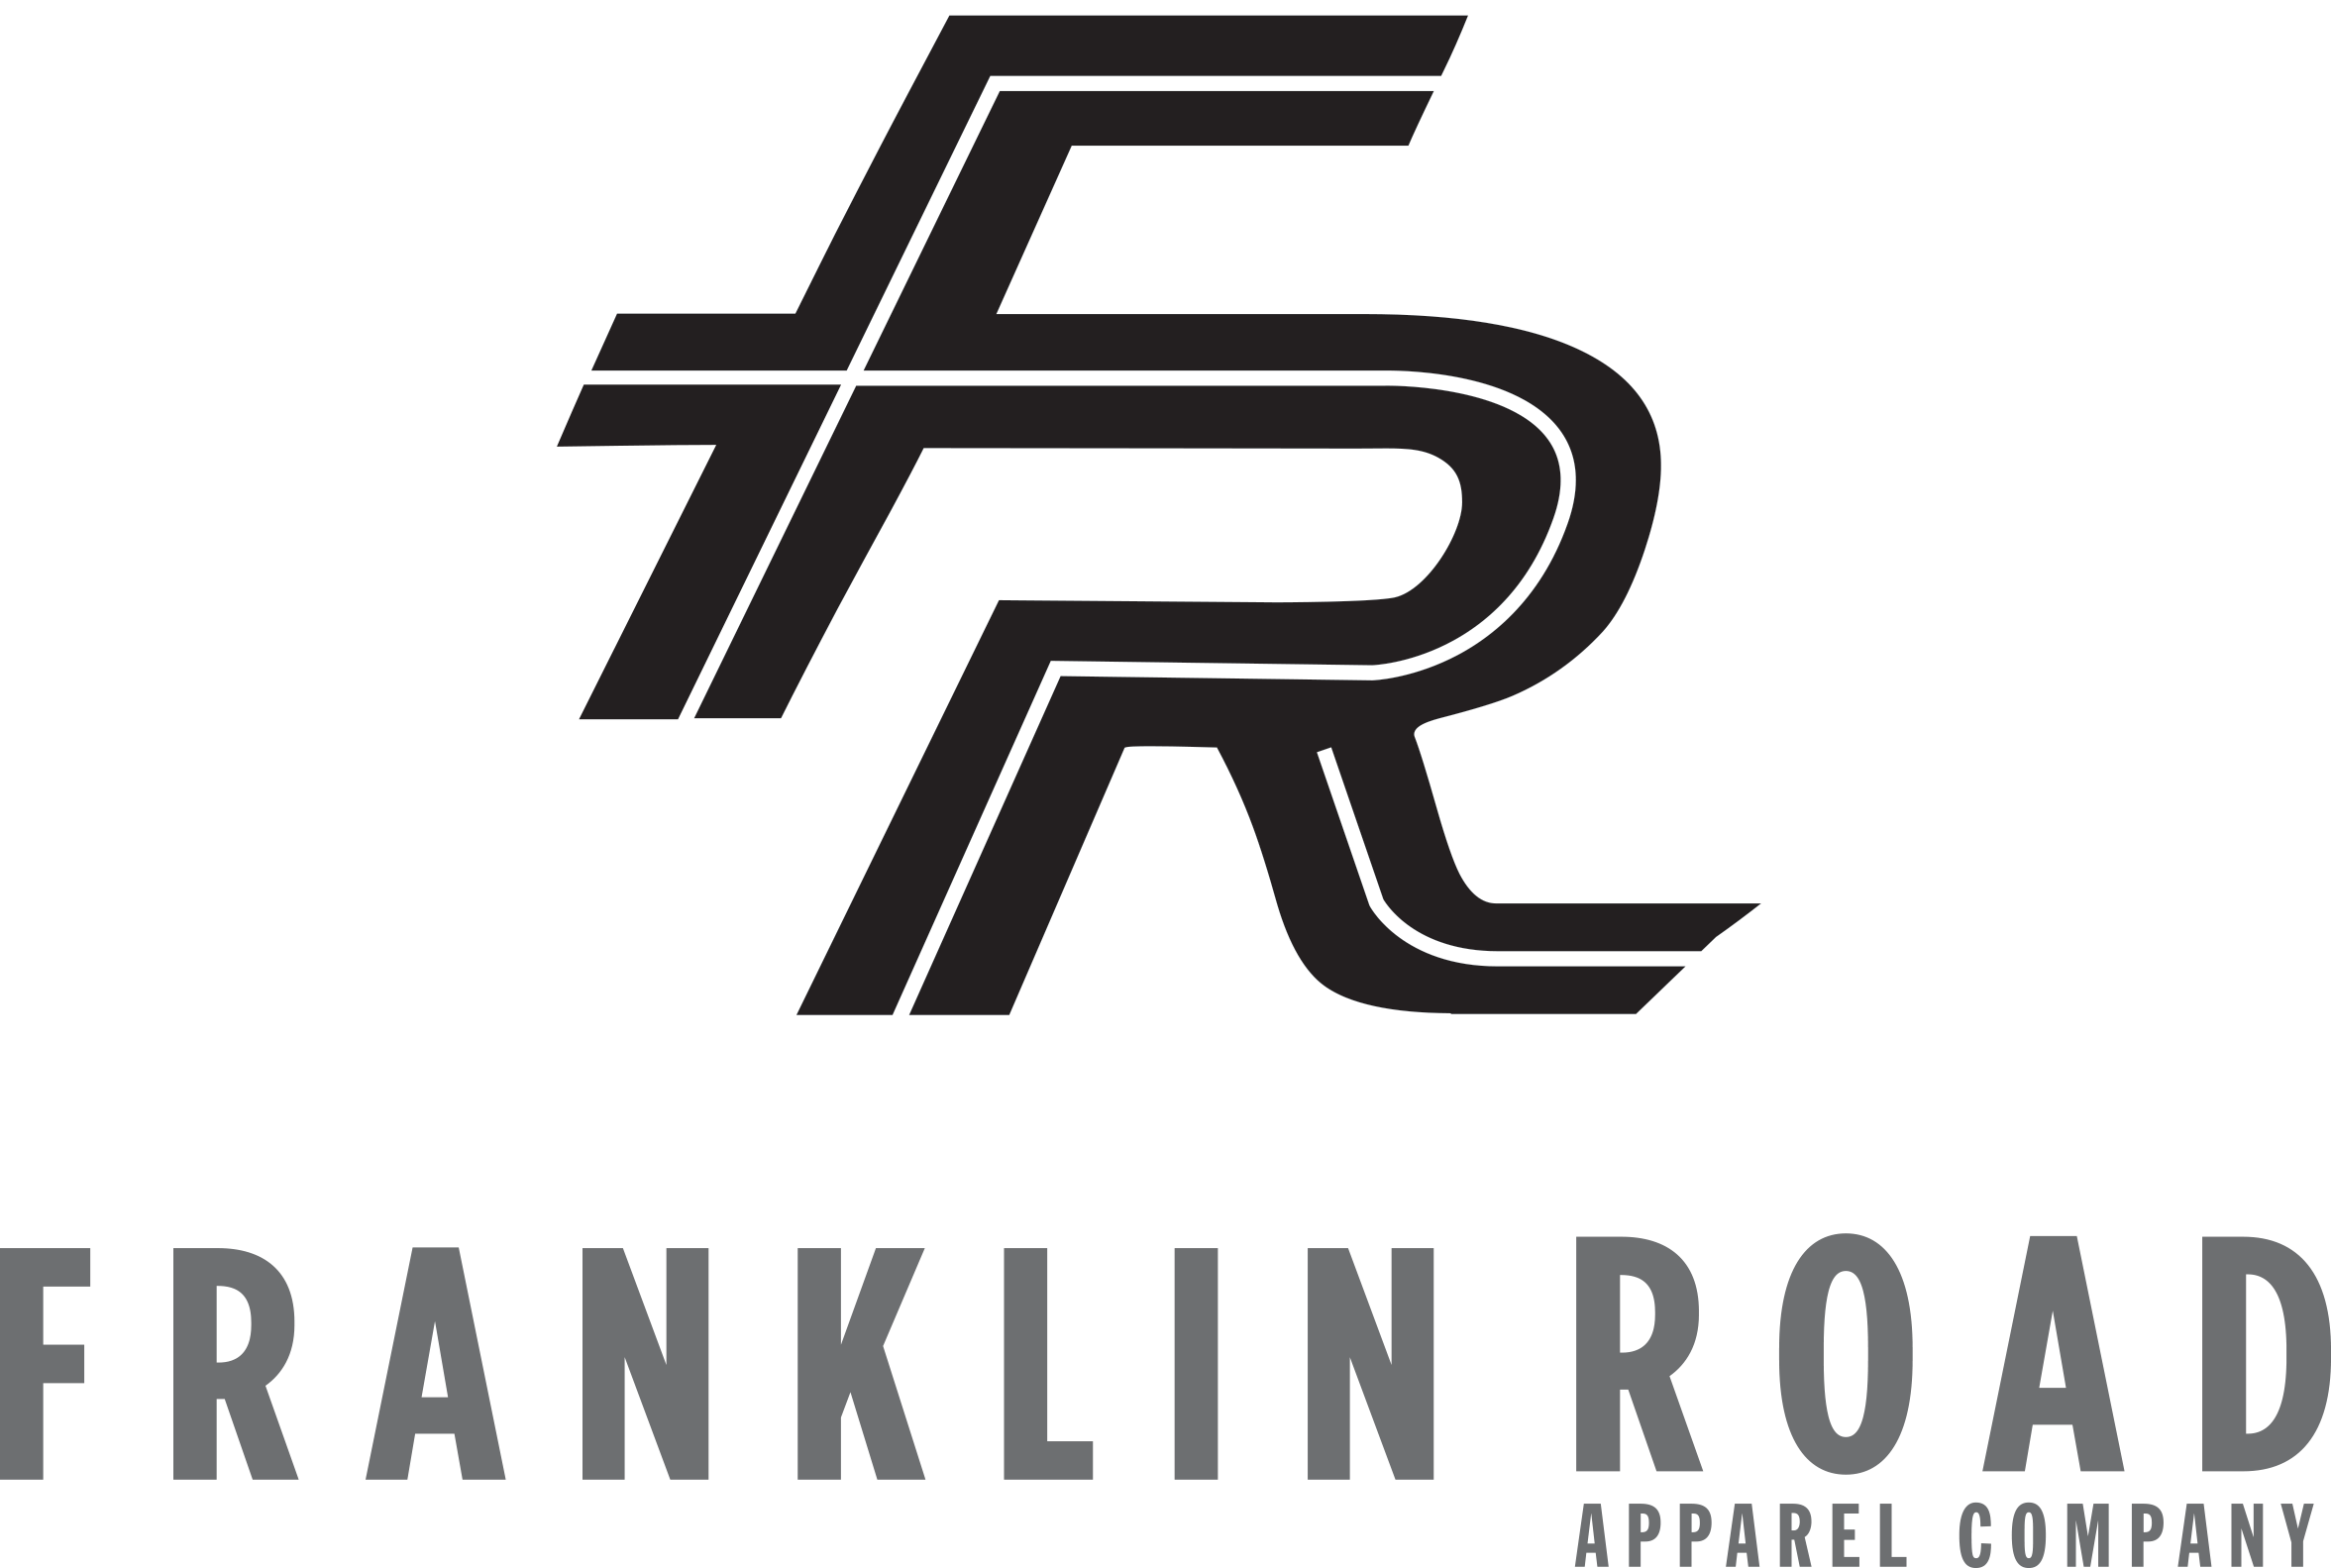 Franklin Road Apparel Company